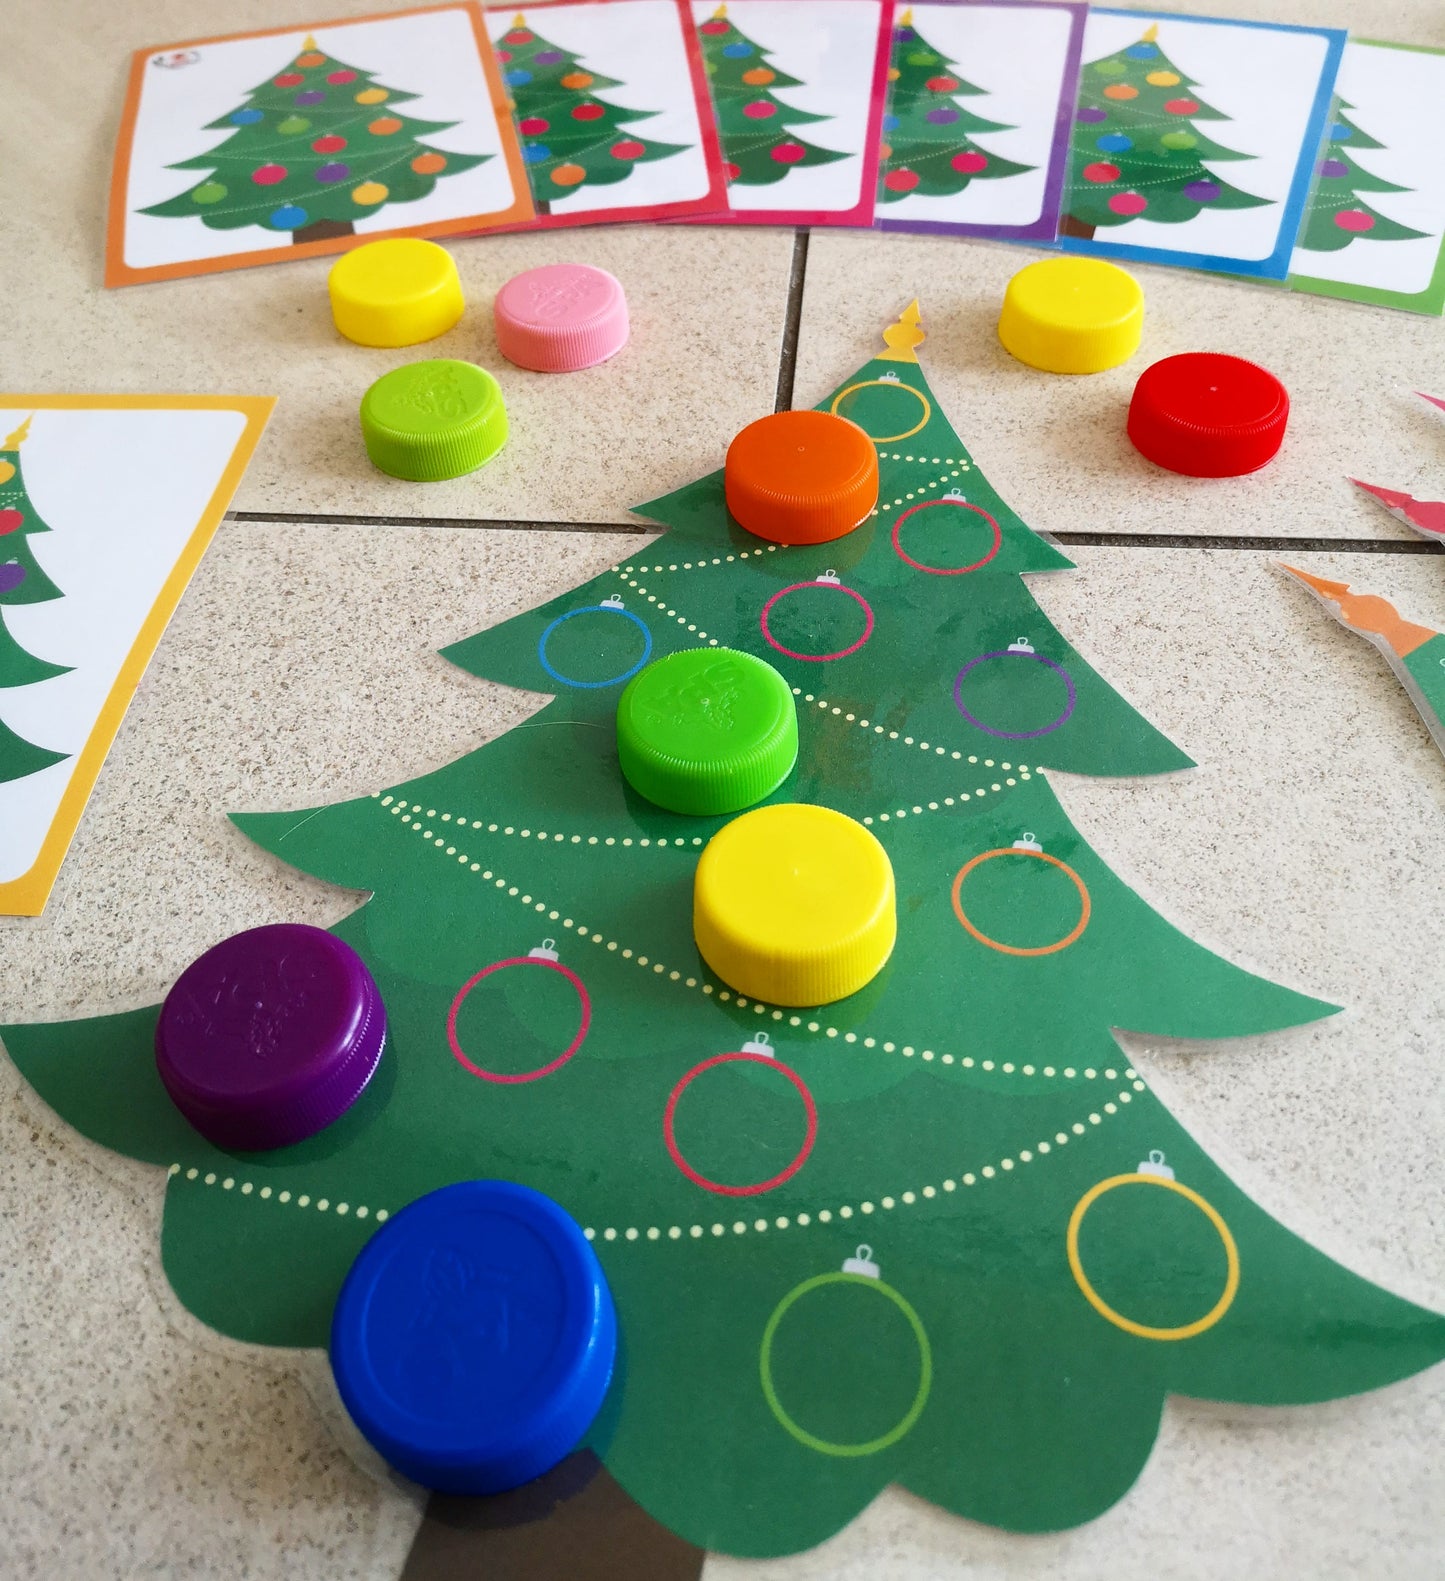 Christmas tree Decorating game